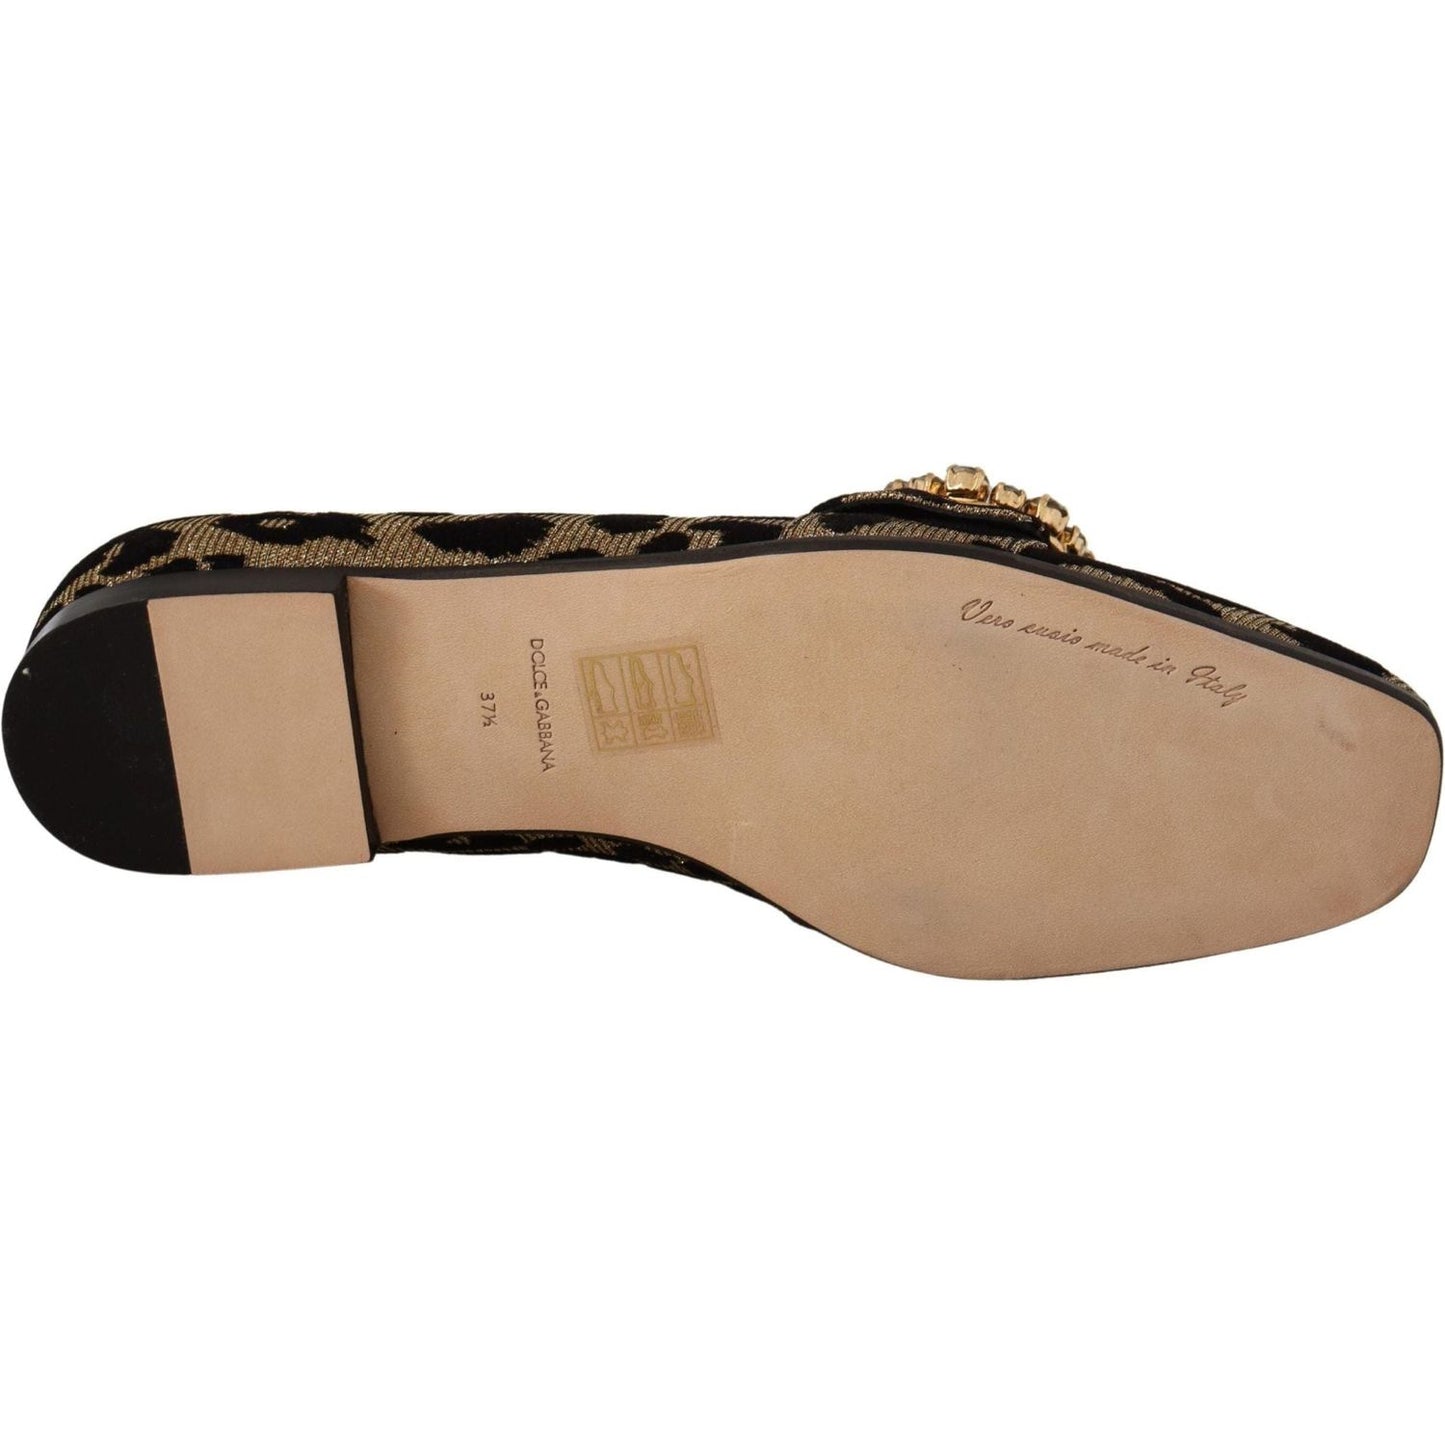 Dolce & Gabbana Elegant Leopard Crystal Gem Loafers gold-leopard-print-crystals-loafers-shoes